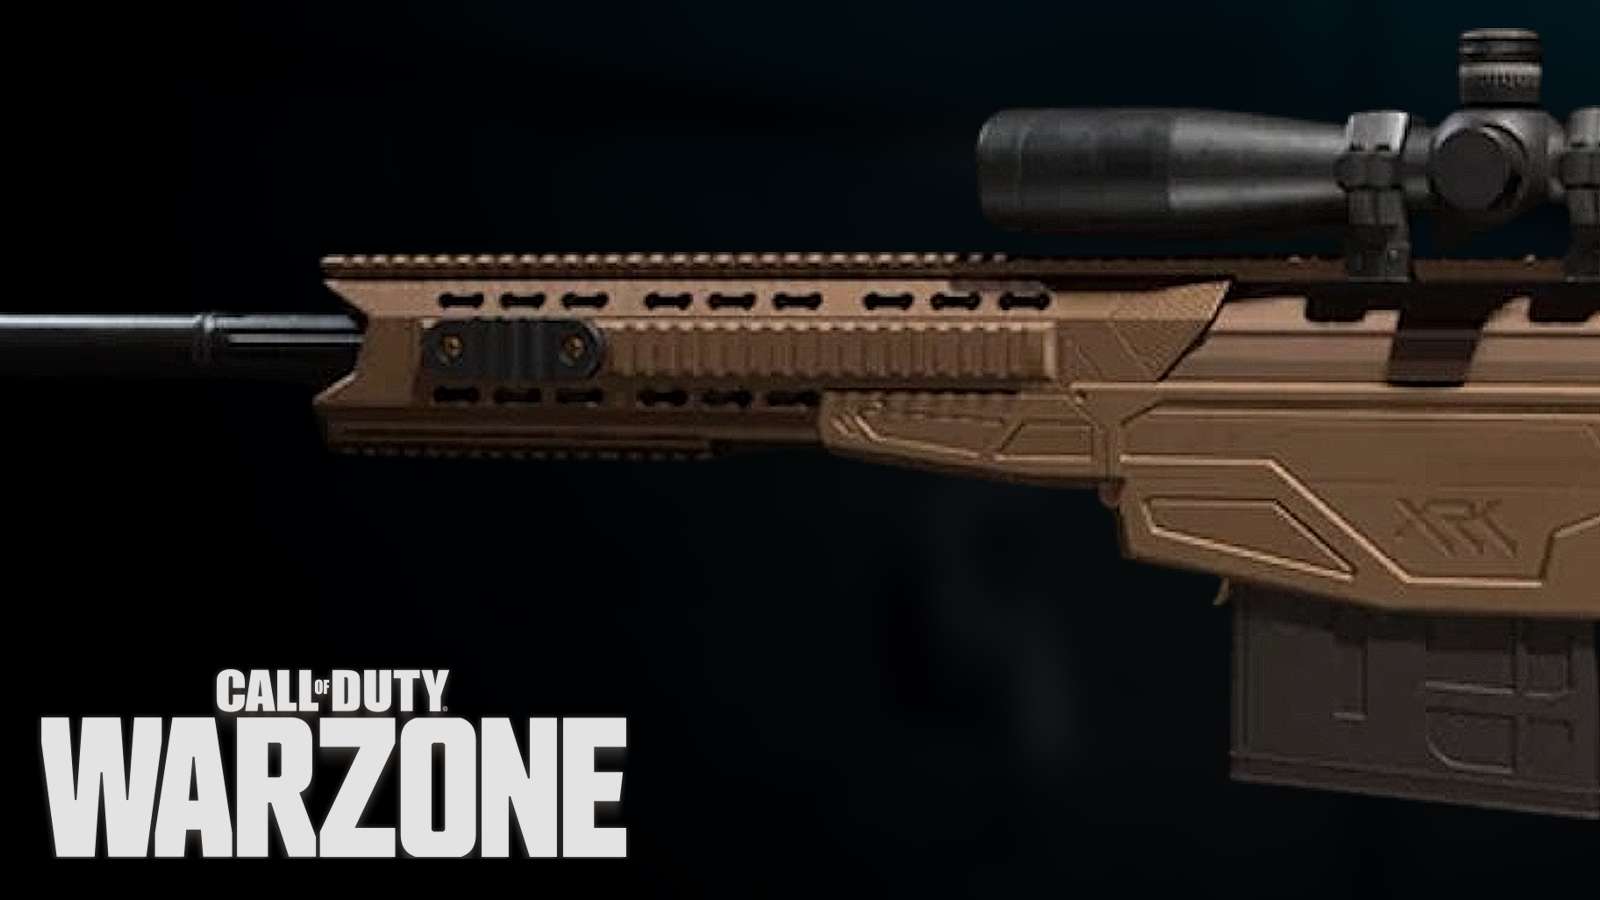 XRK Stalker sniper rifle with Warzone logo.